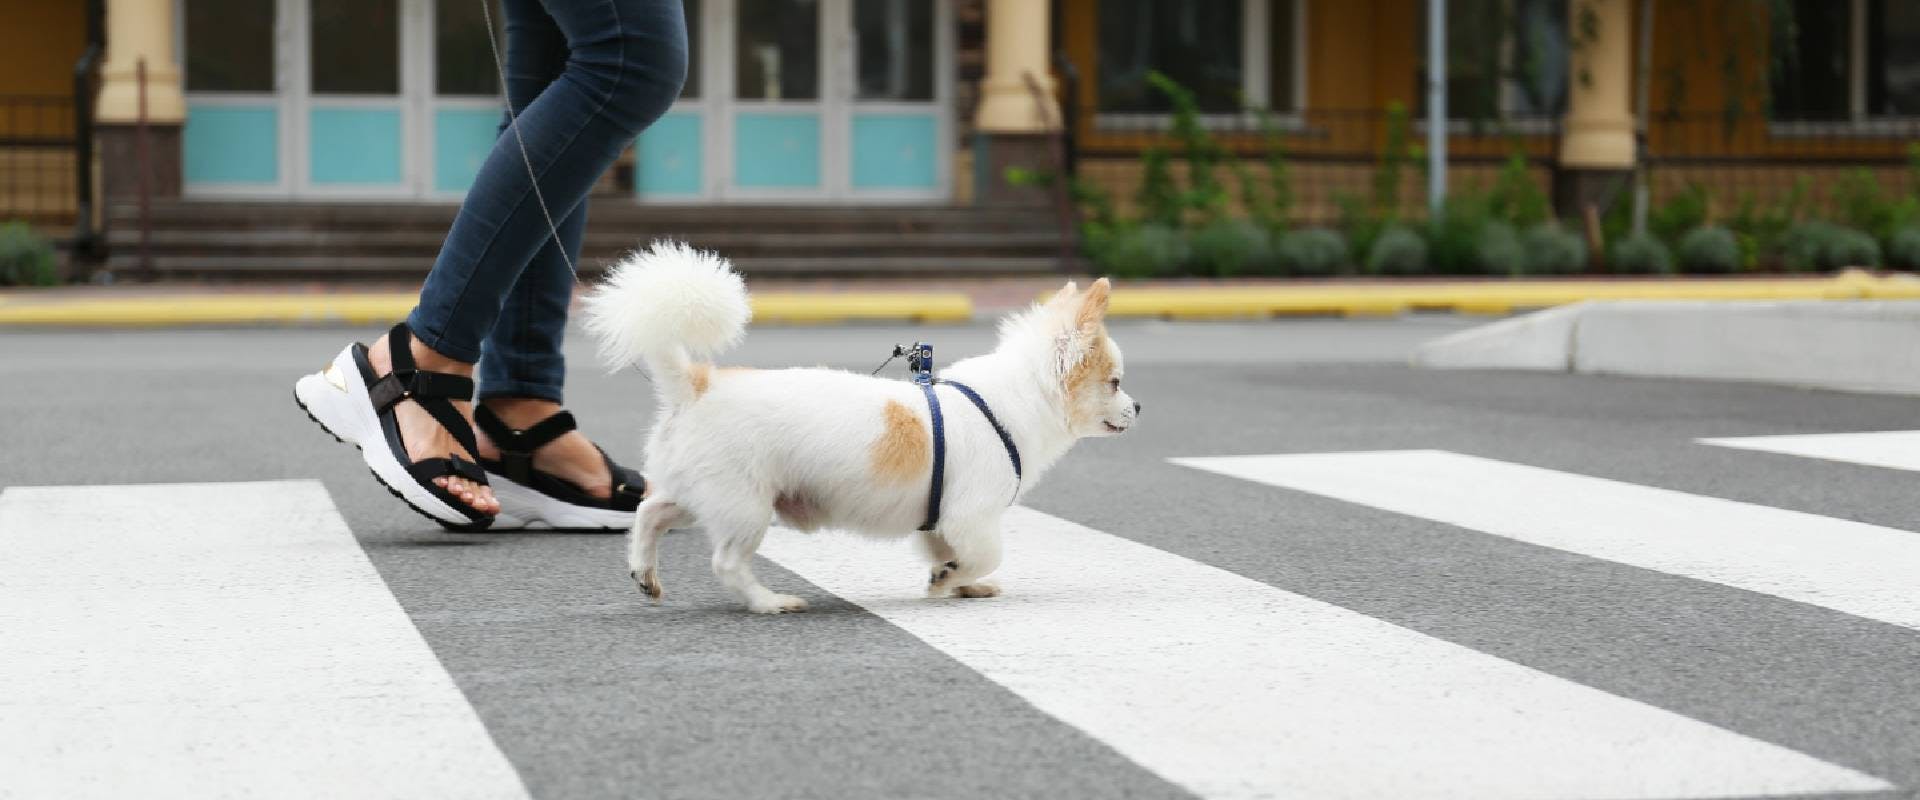 Chihuahua walking across a road on a leash